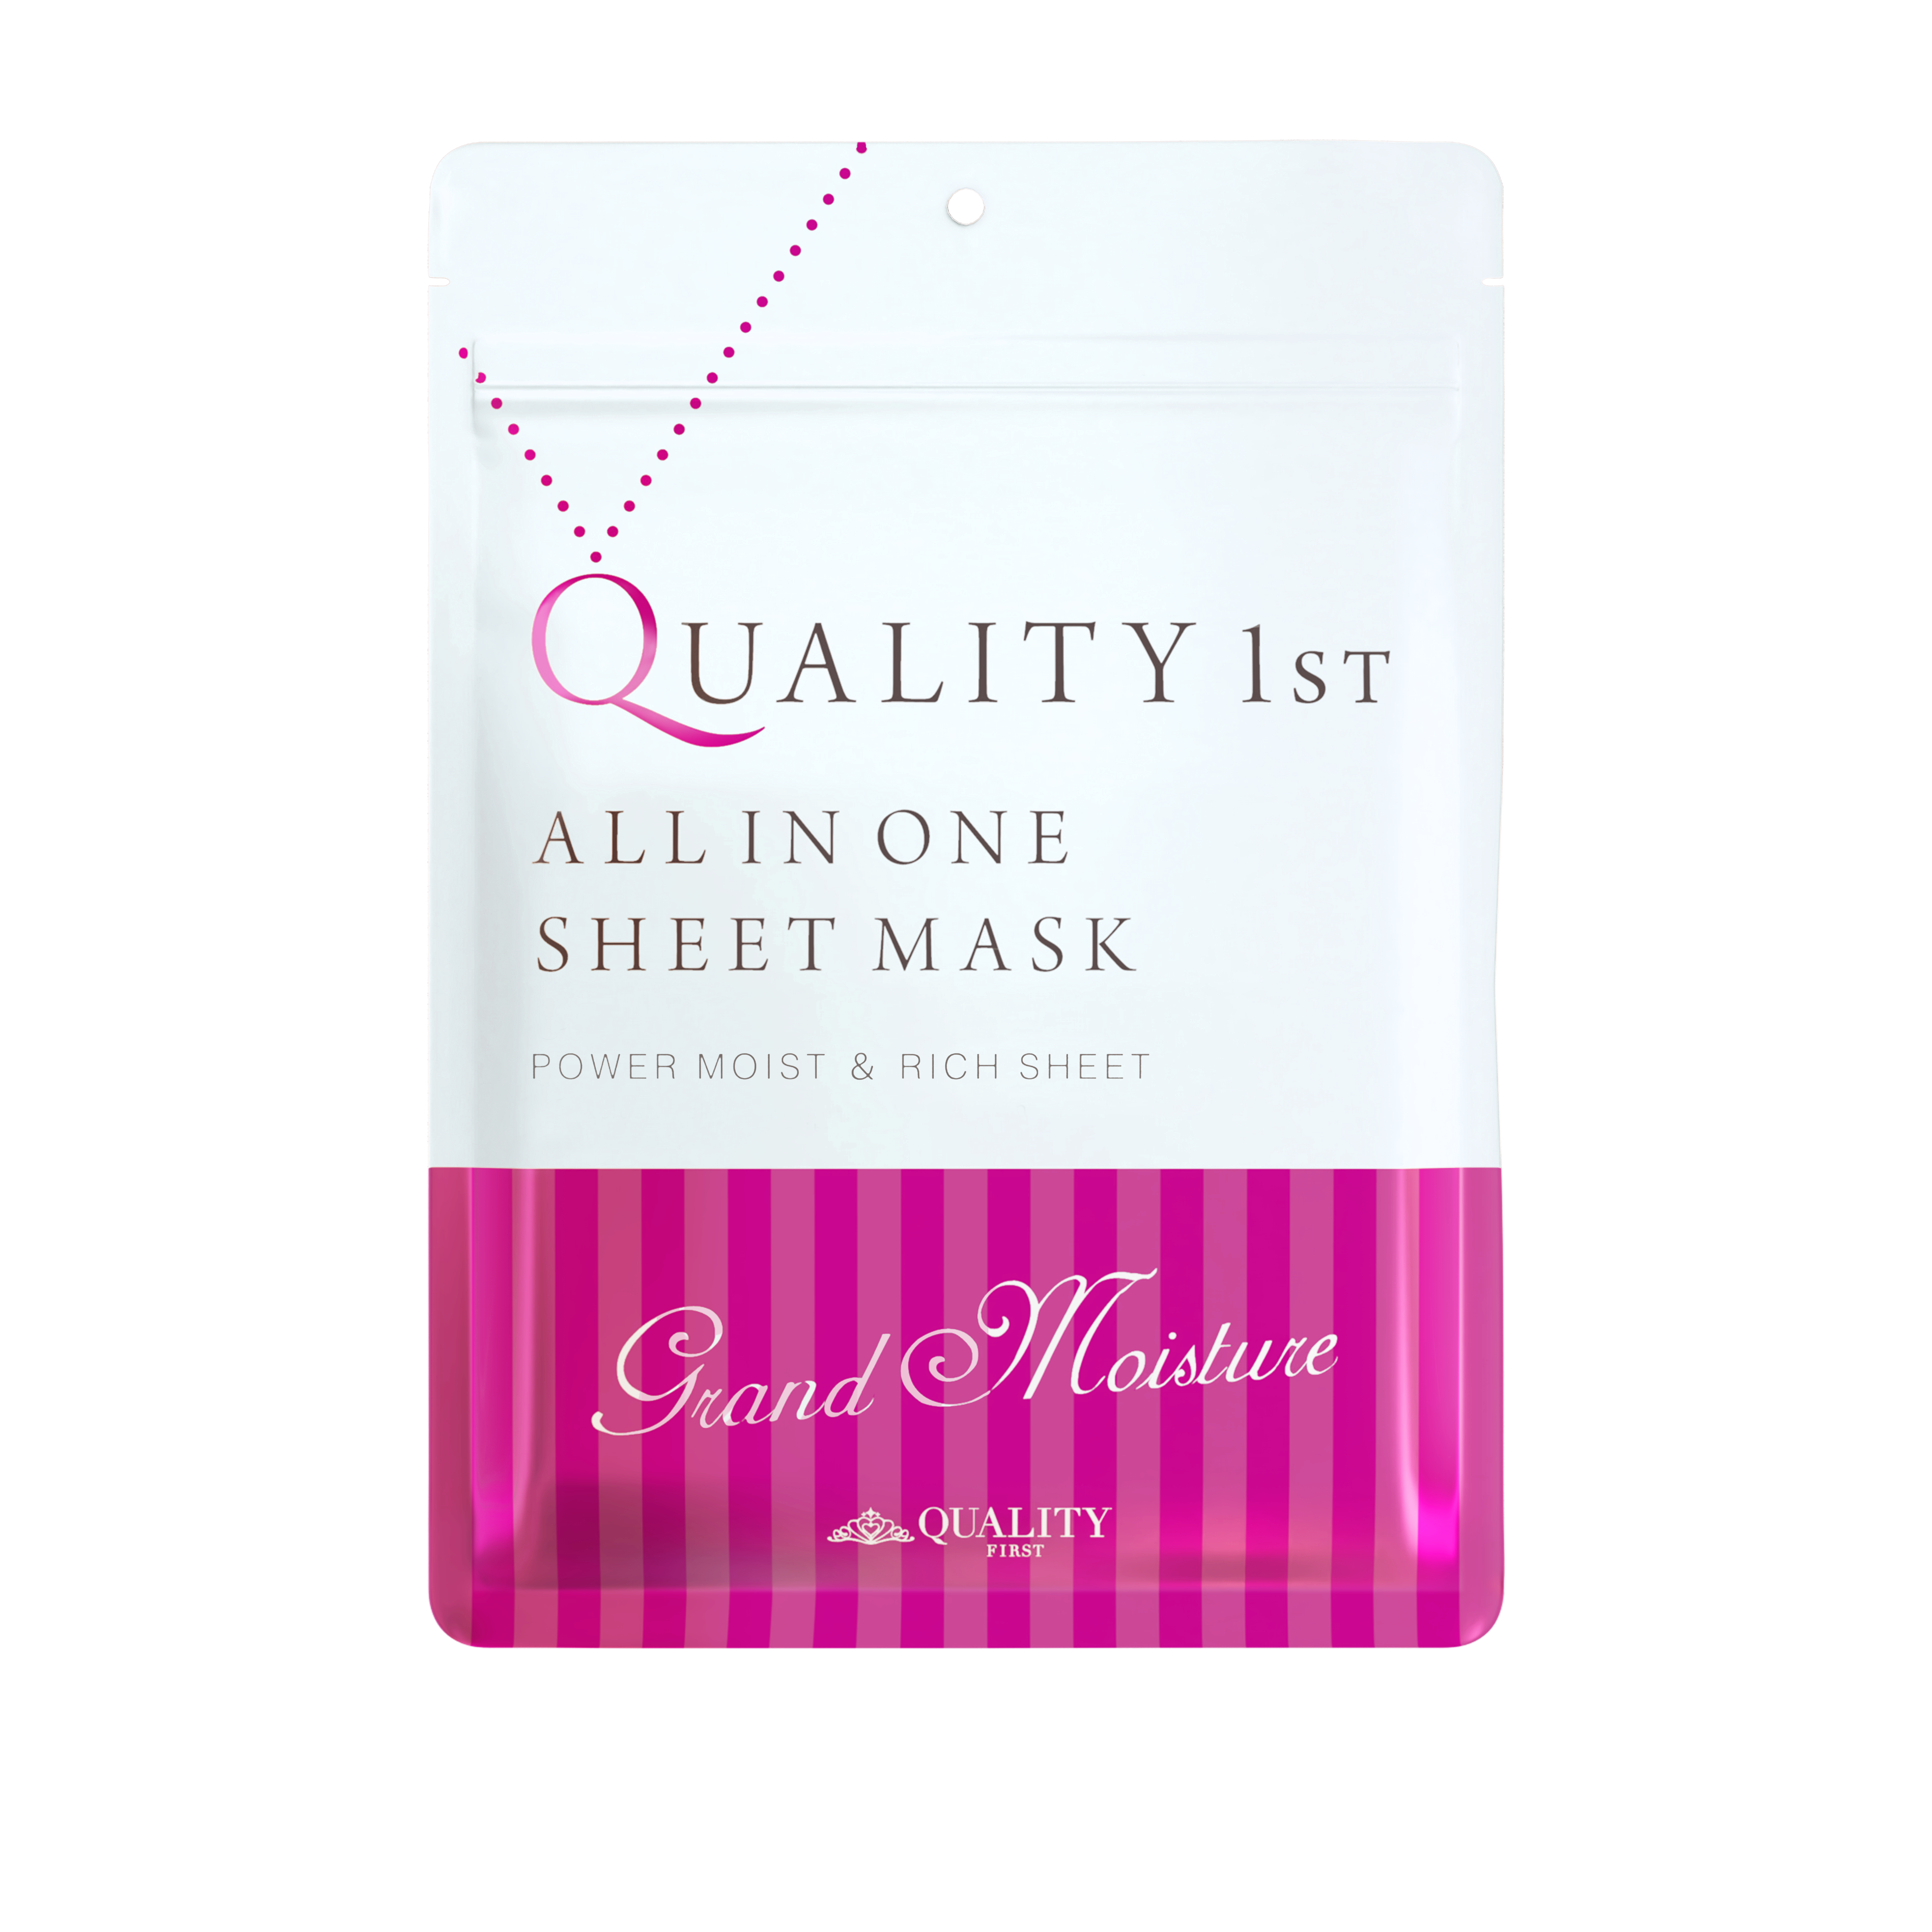 Quality 1st sheet mask Grand Moisture Антивозрастная увлажняющая маска  «Всё в одном», 7 шт 